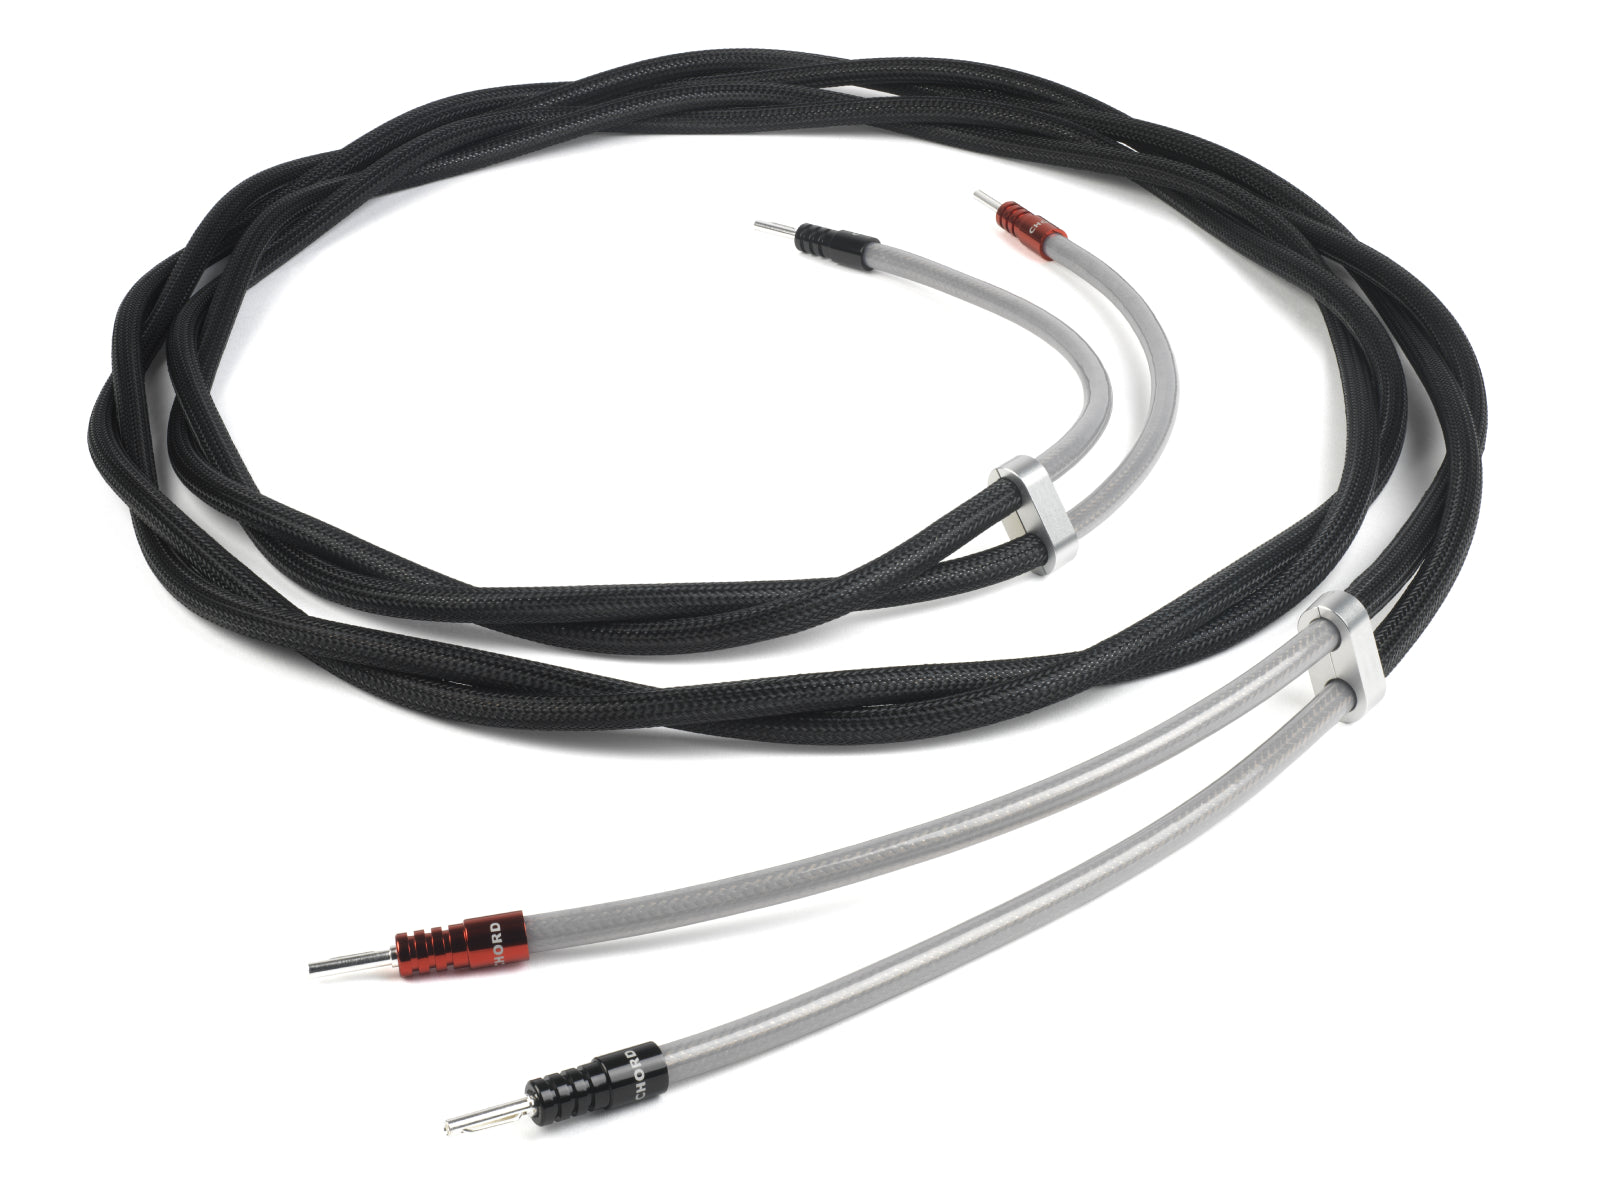 Chord Signature XL speaker cable